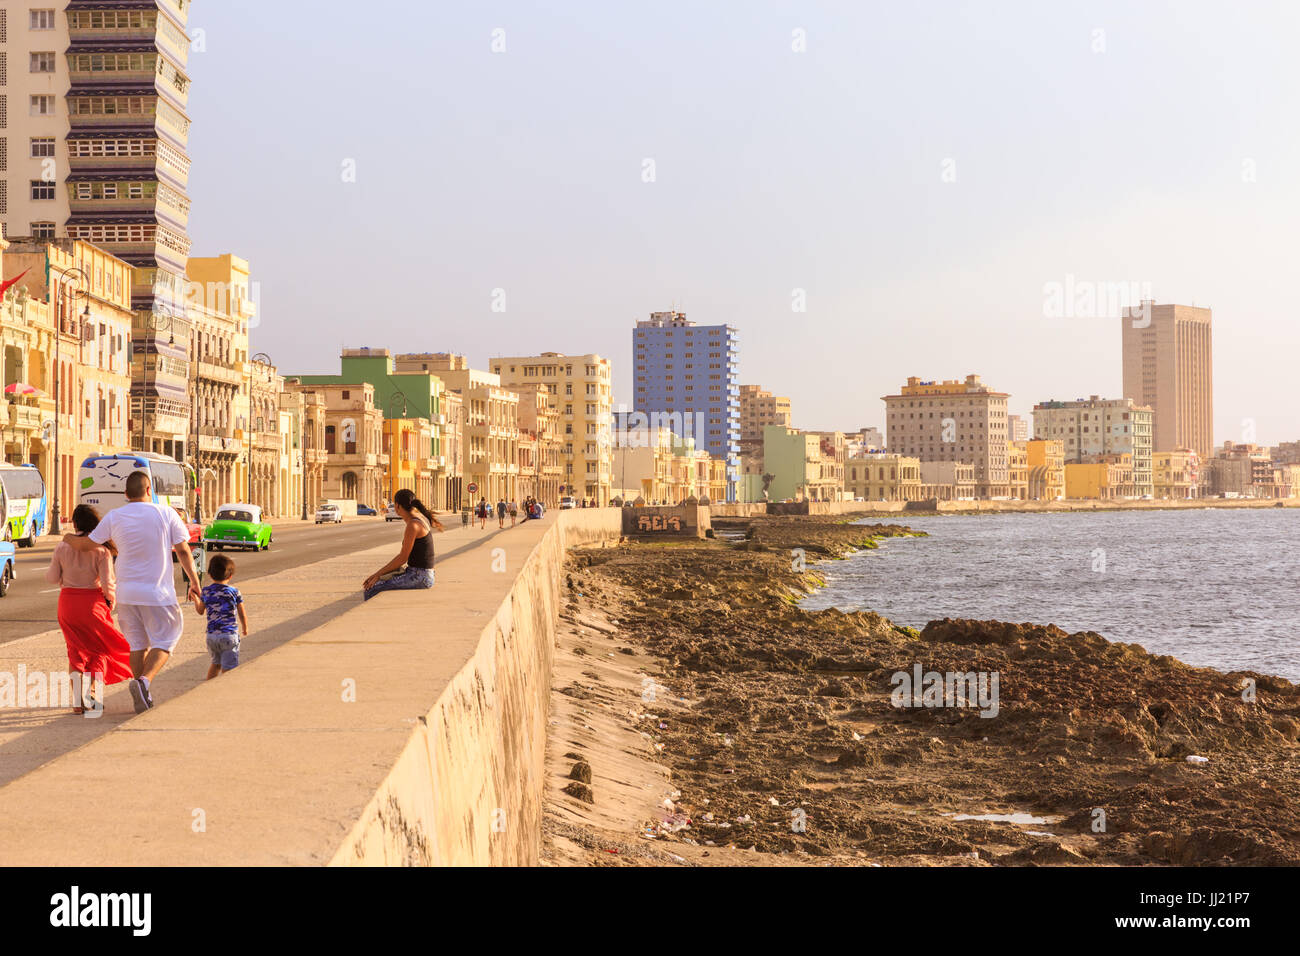 People walking on the Malecon seafront promenade, Havana, Cuba Stock Photo